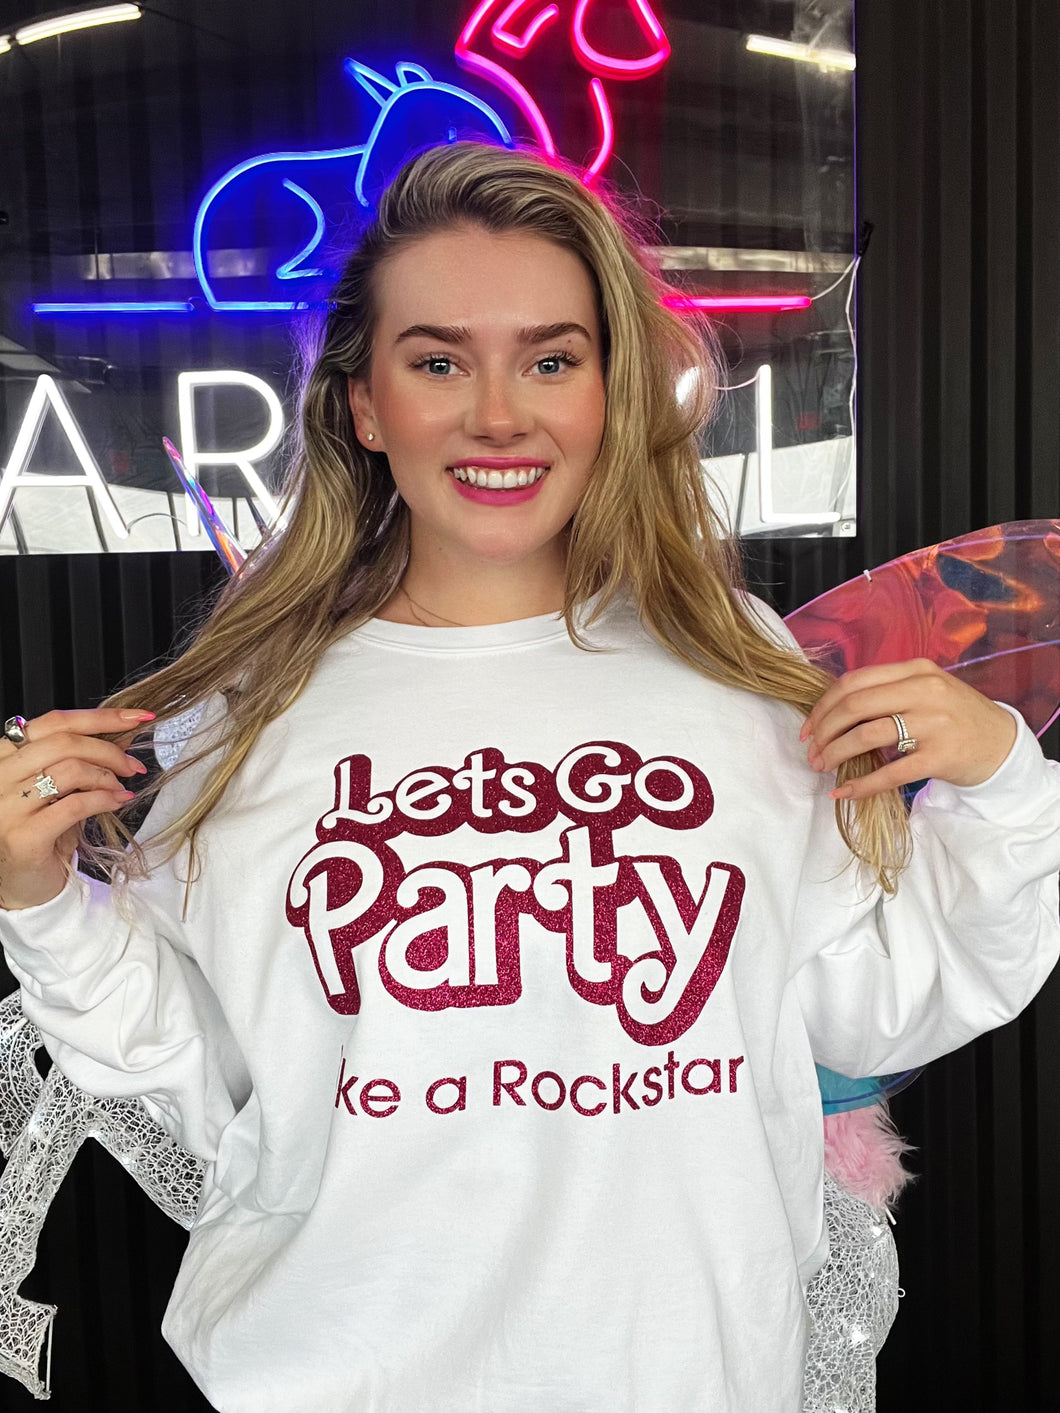 Let’s go party sweatshirt